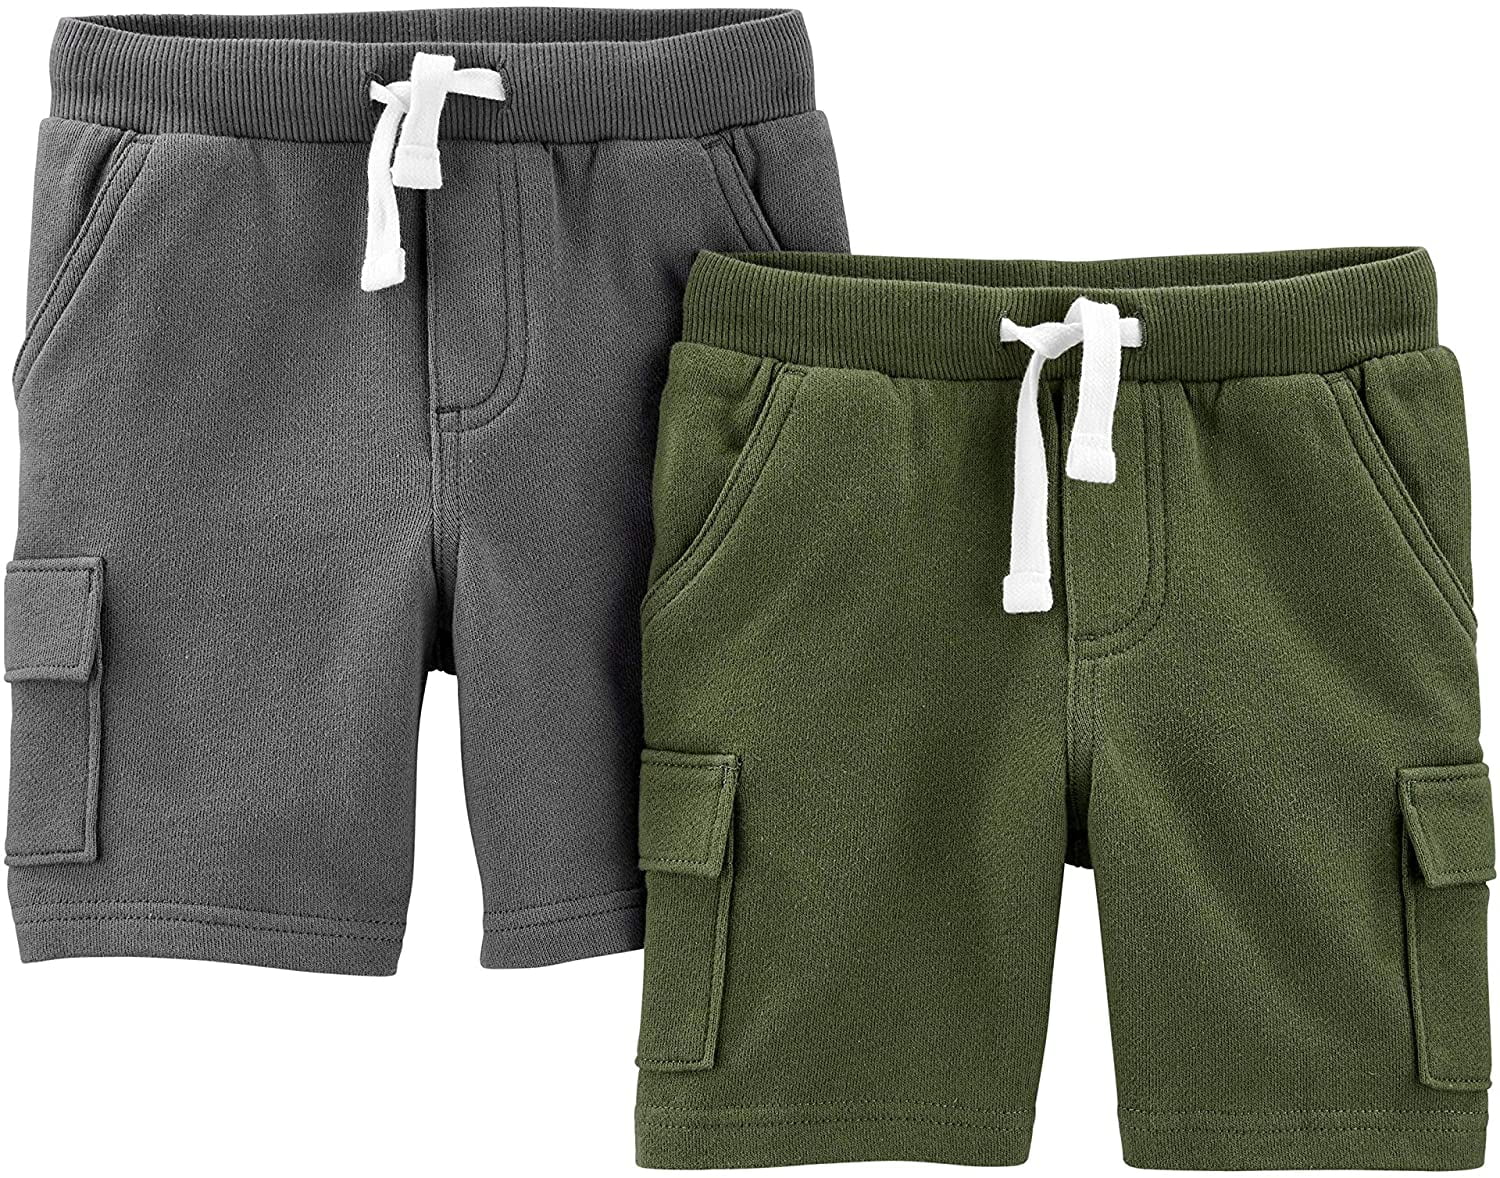 Simple Joys by Carters Boys Multi-Pack Knit Shorts 18 Months Light Grey/Navy